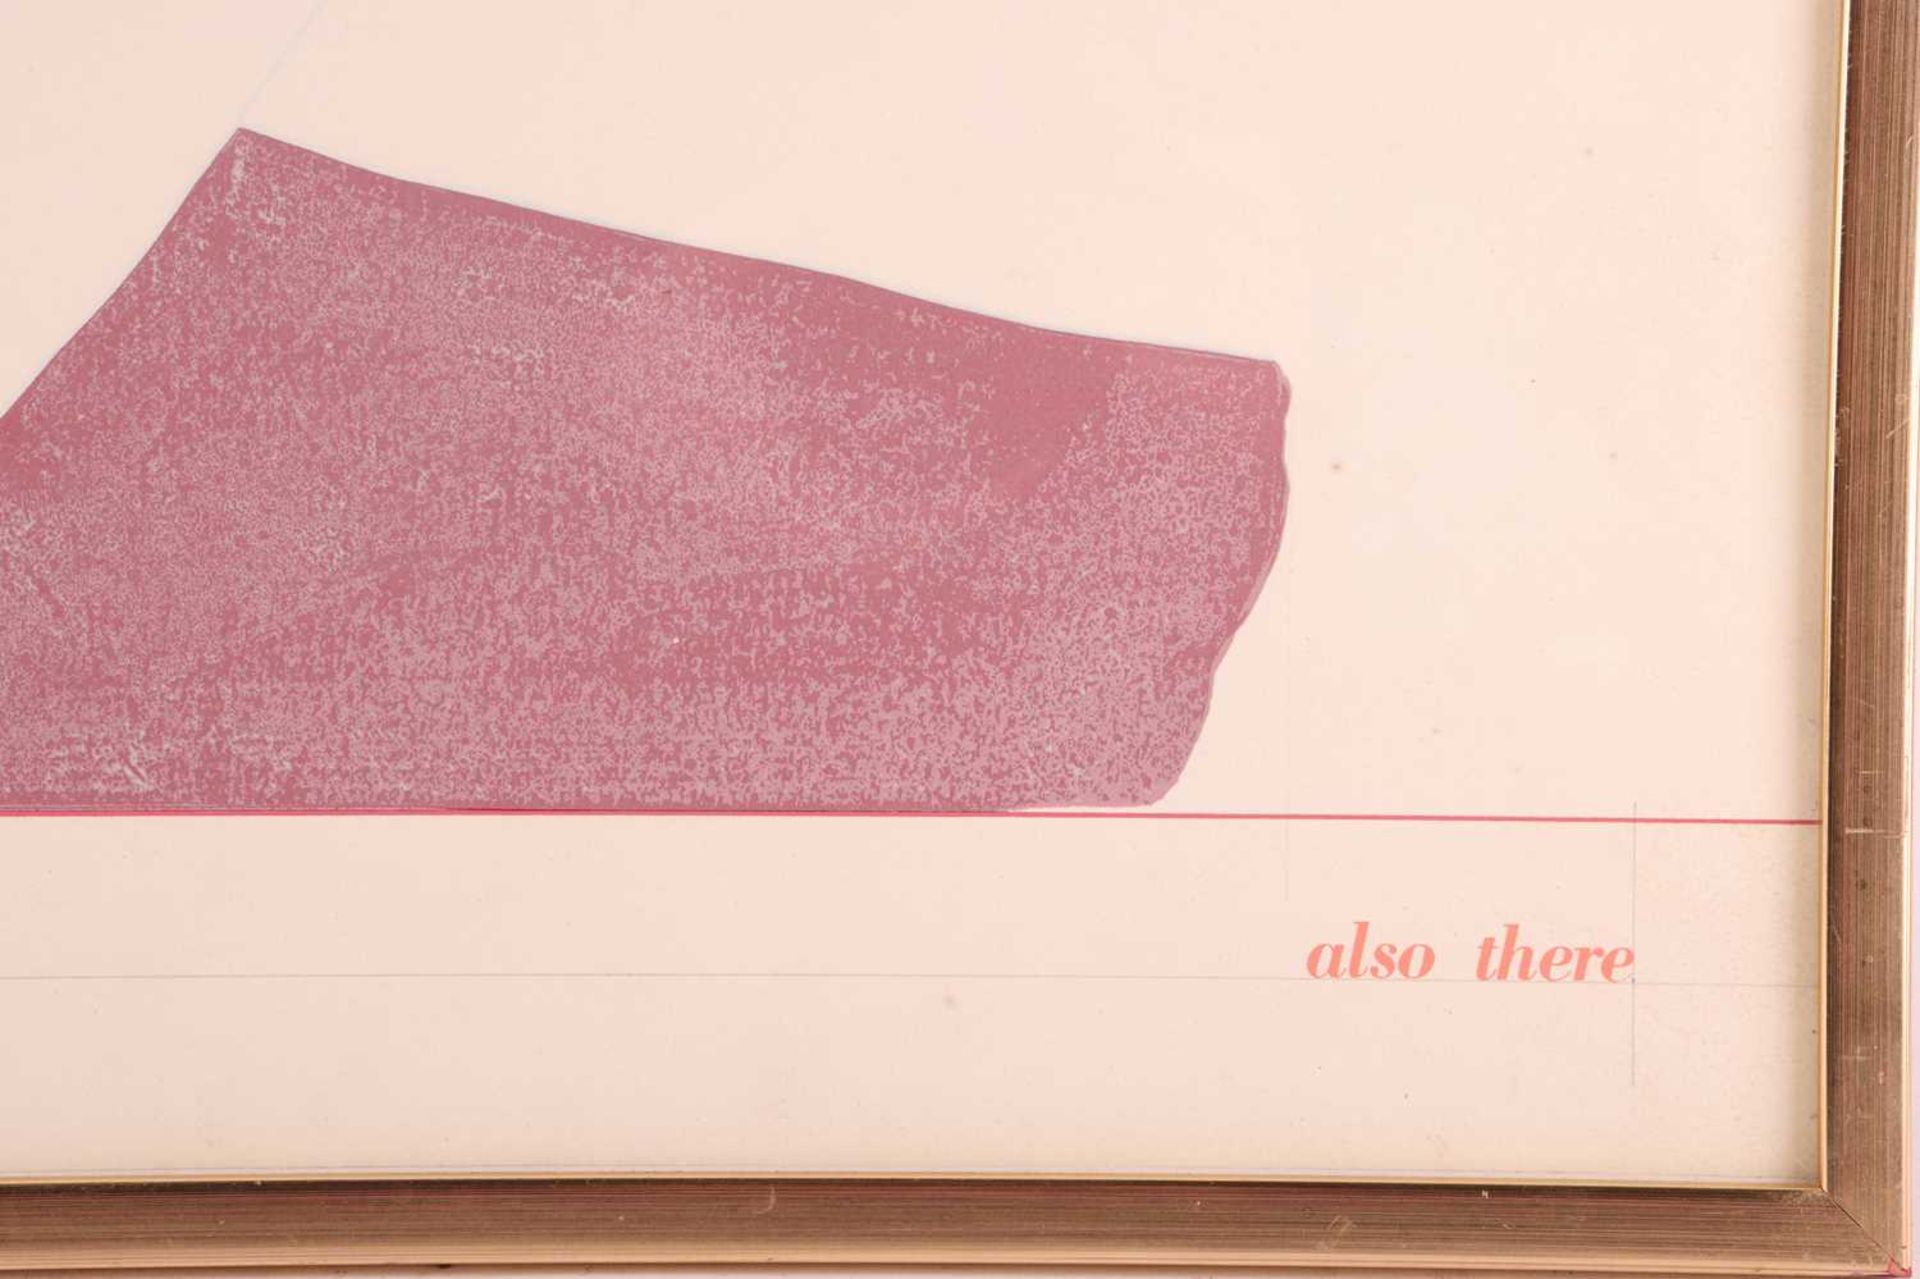 Derrick Greaves (1927-2002), 'Alter Alter Also There', screenprint, unsigned, 46 cm x 62 cm, framed  - Bild 3 aus 5